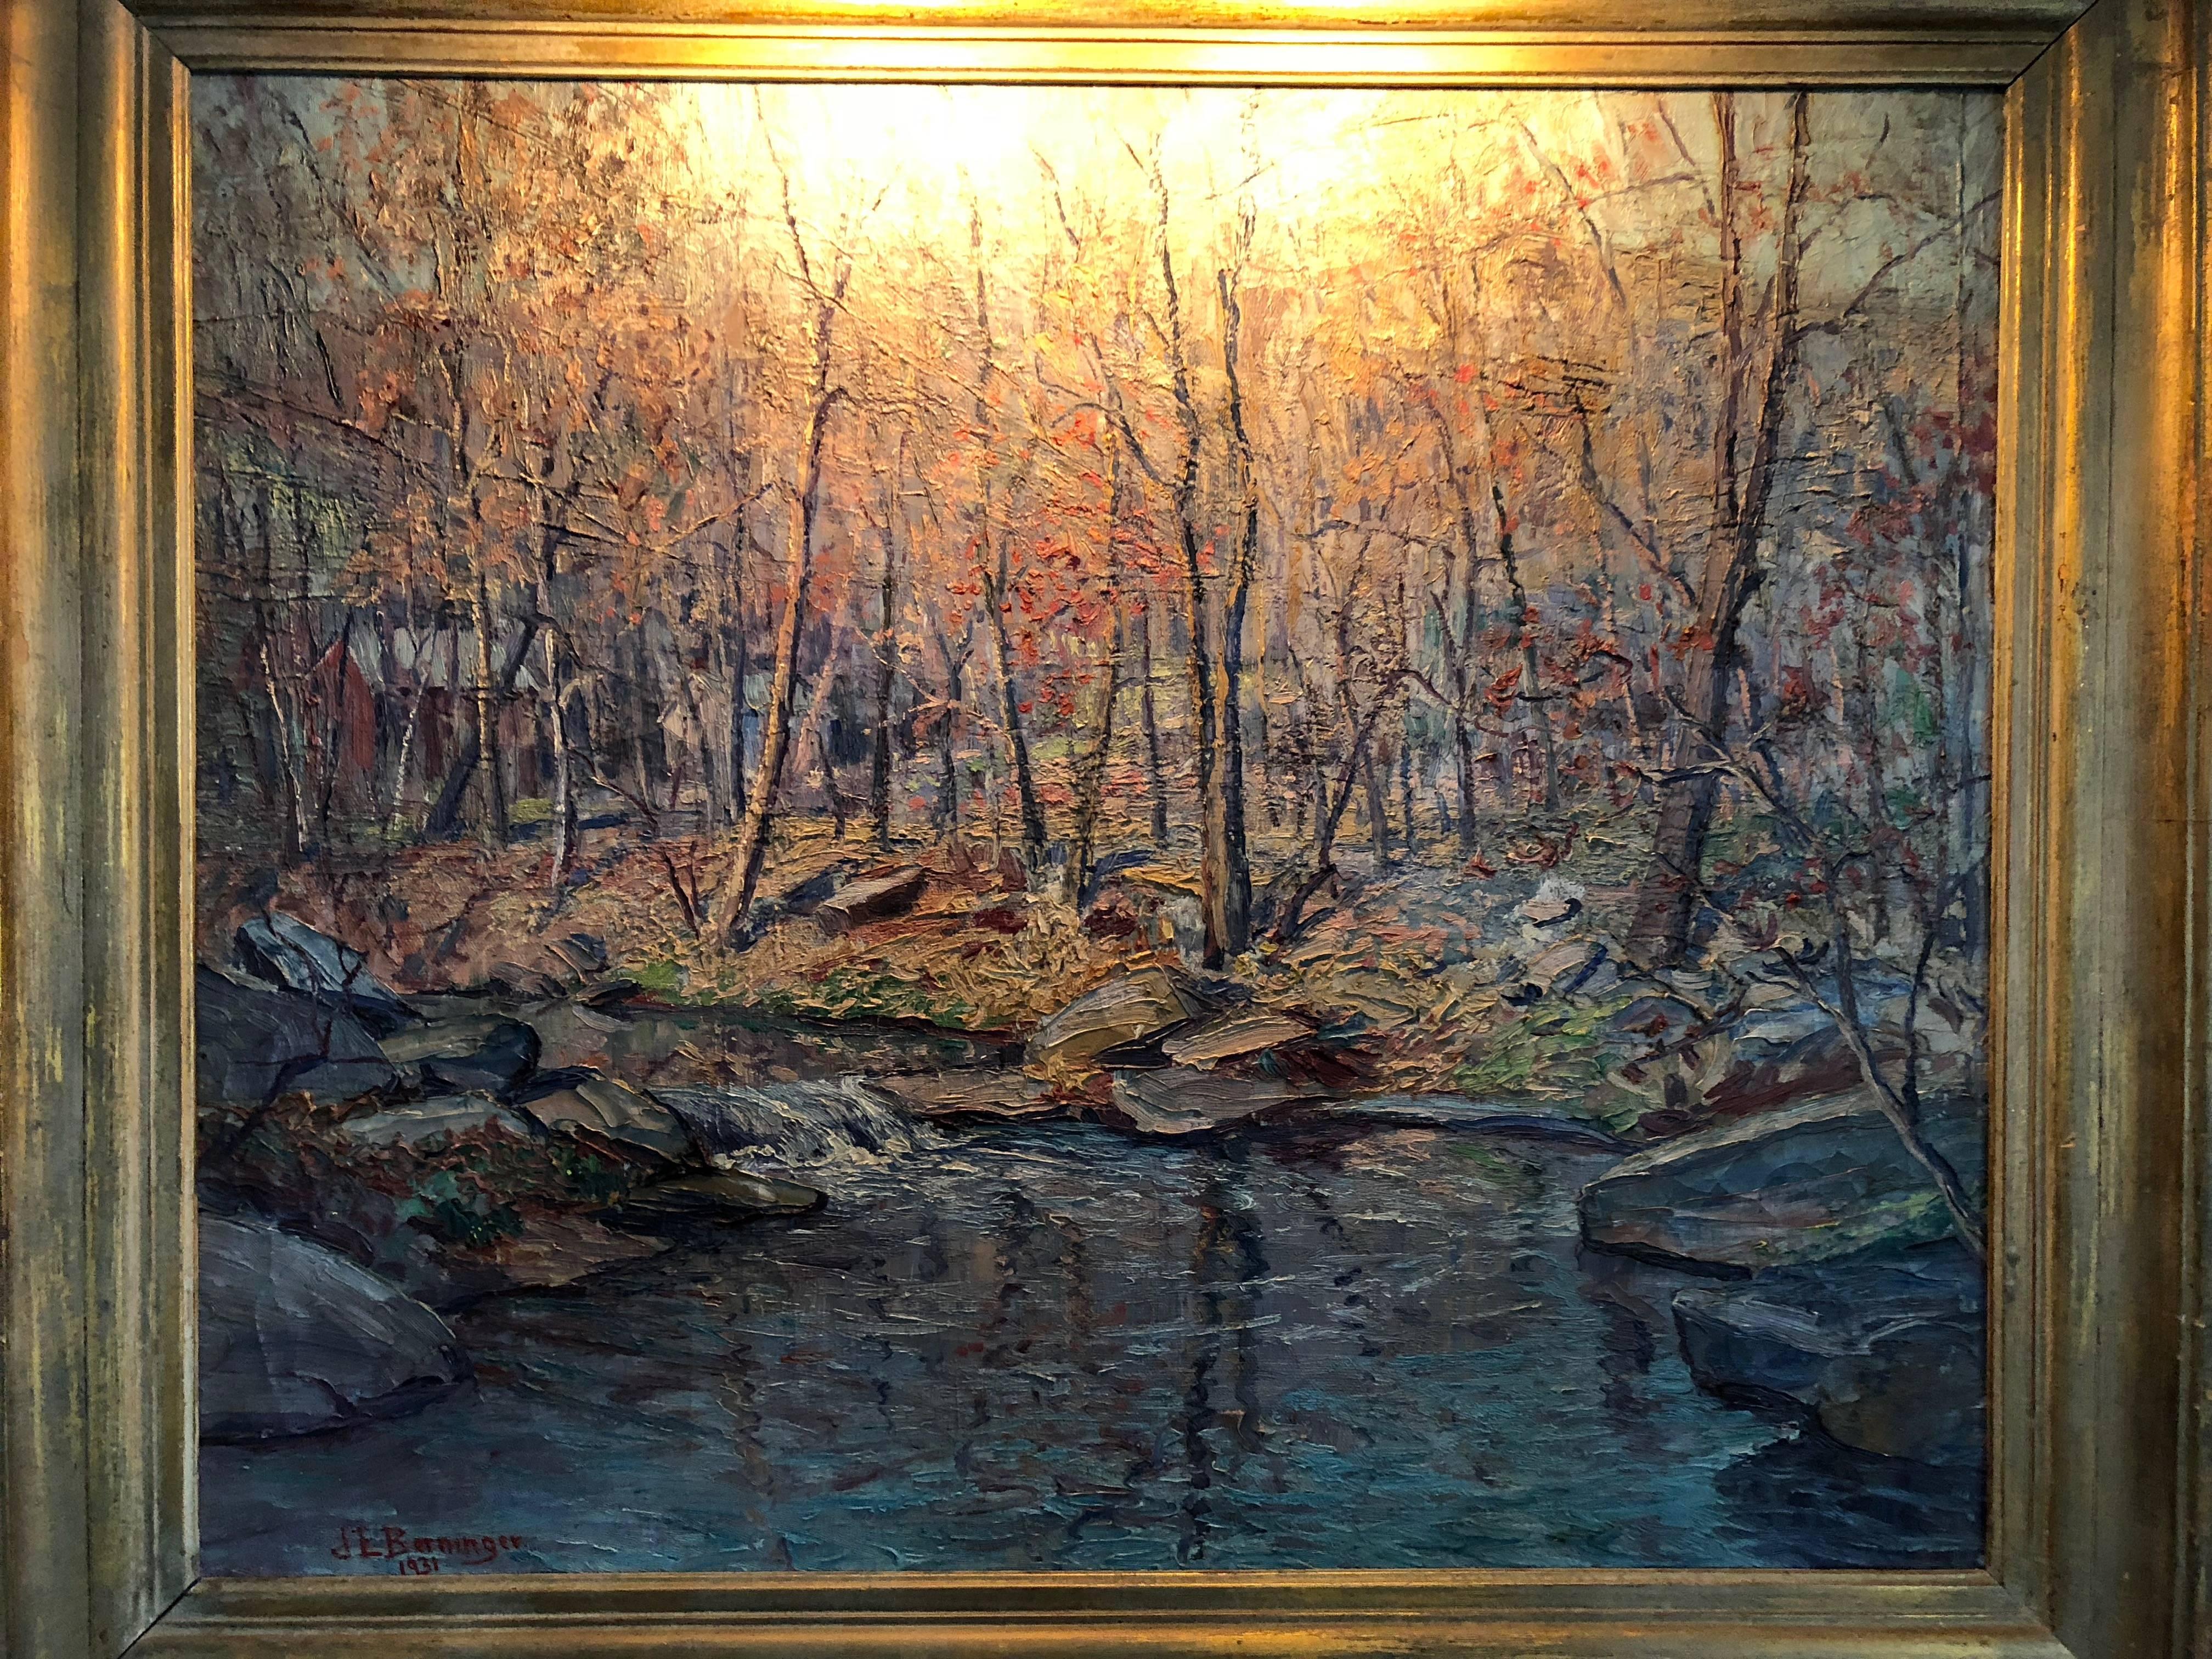 Pennsylvania post impressionist landscape by John Berninger 
Oil On canvas 25